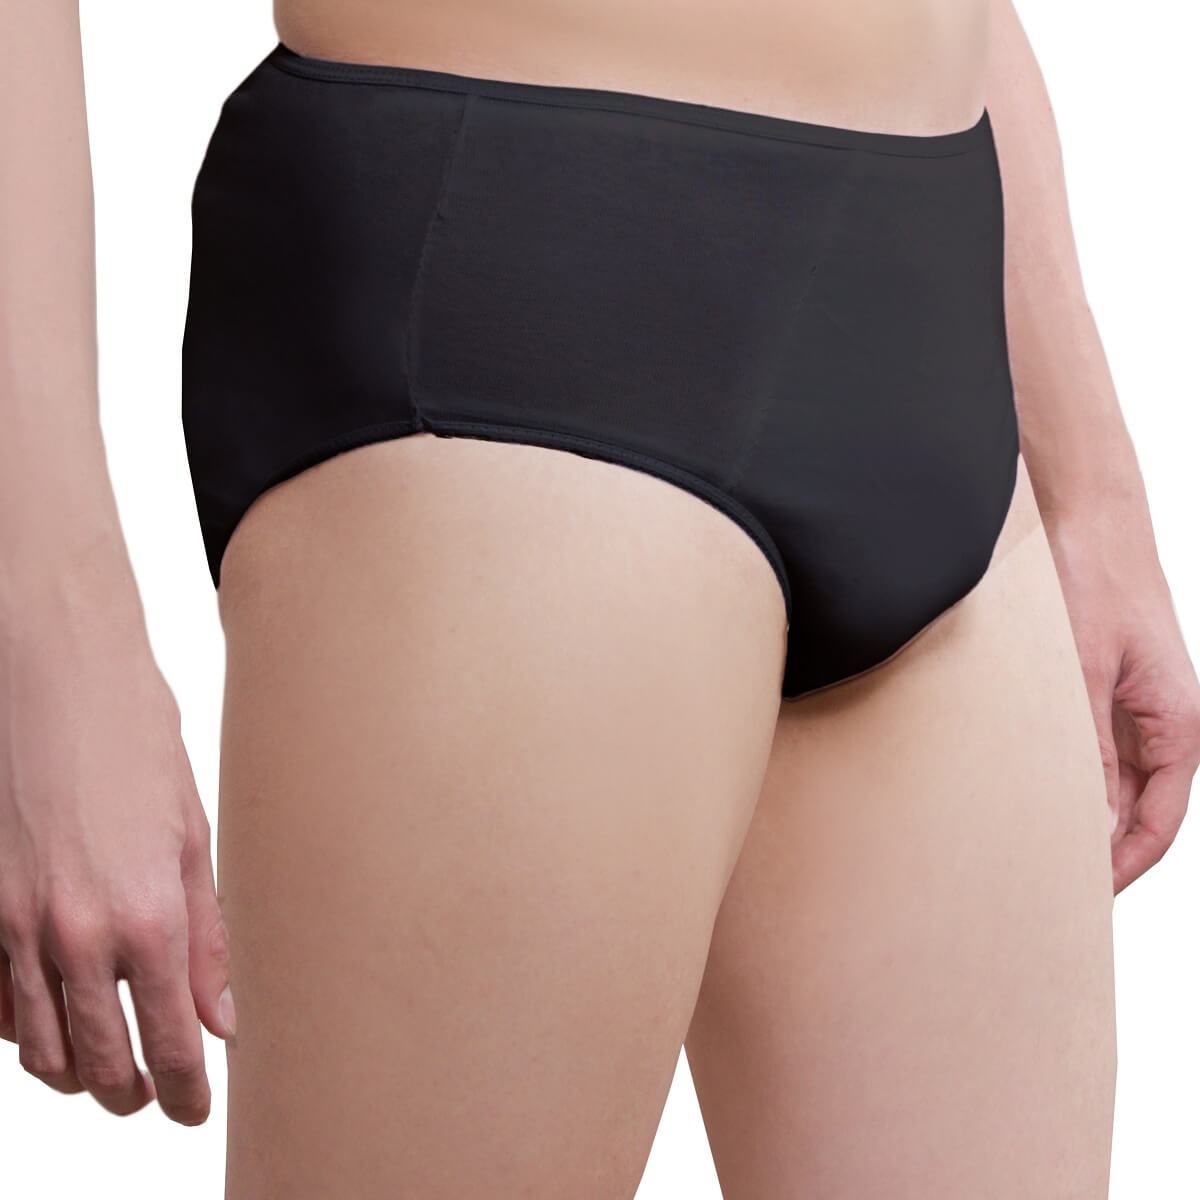 Disposable men's black cotton underwear for hospital travel spa sauna – OW- Travel